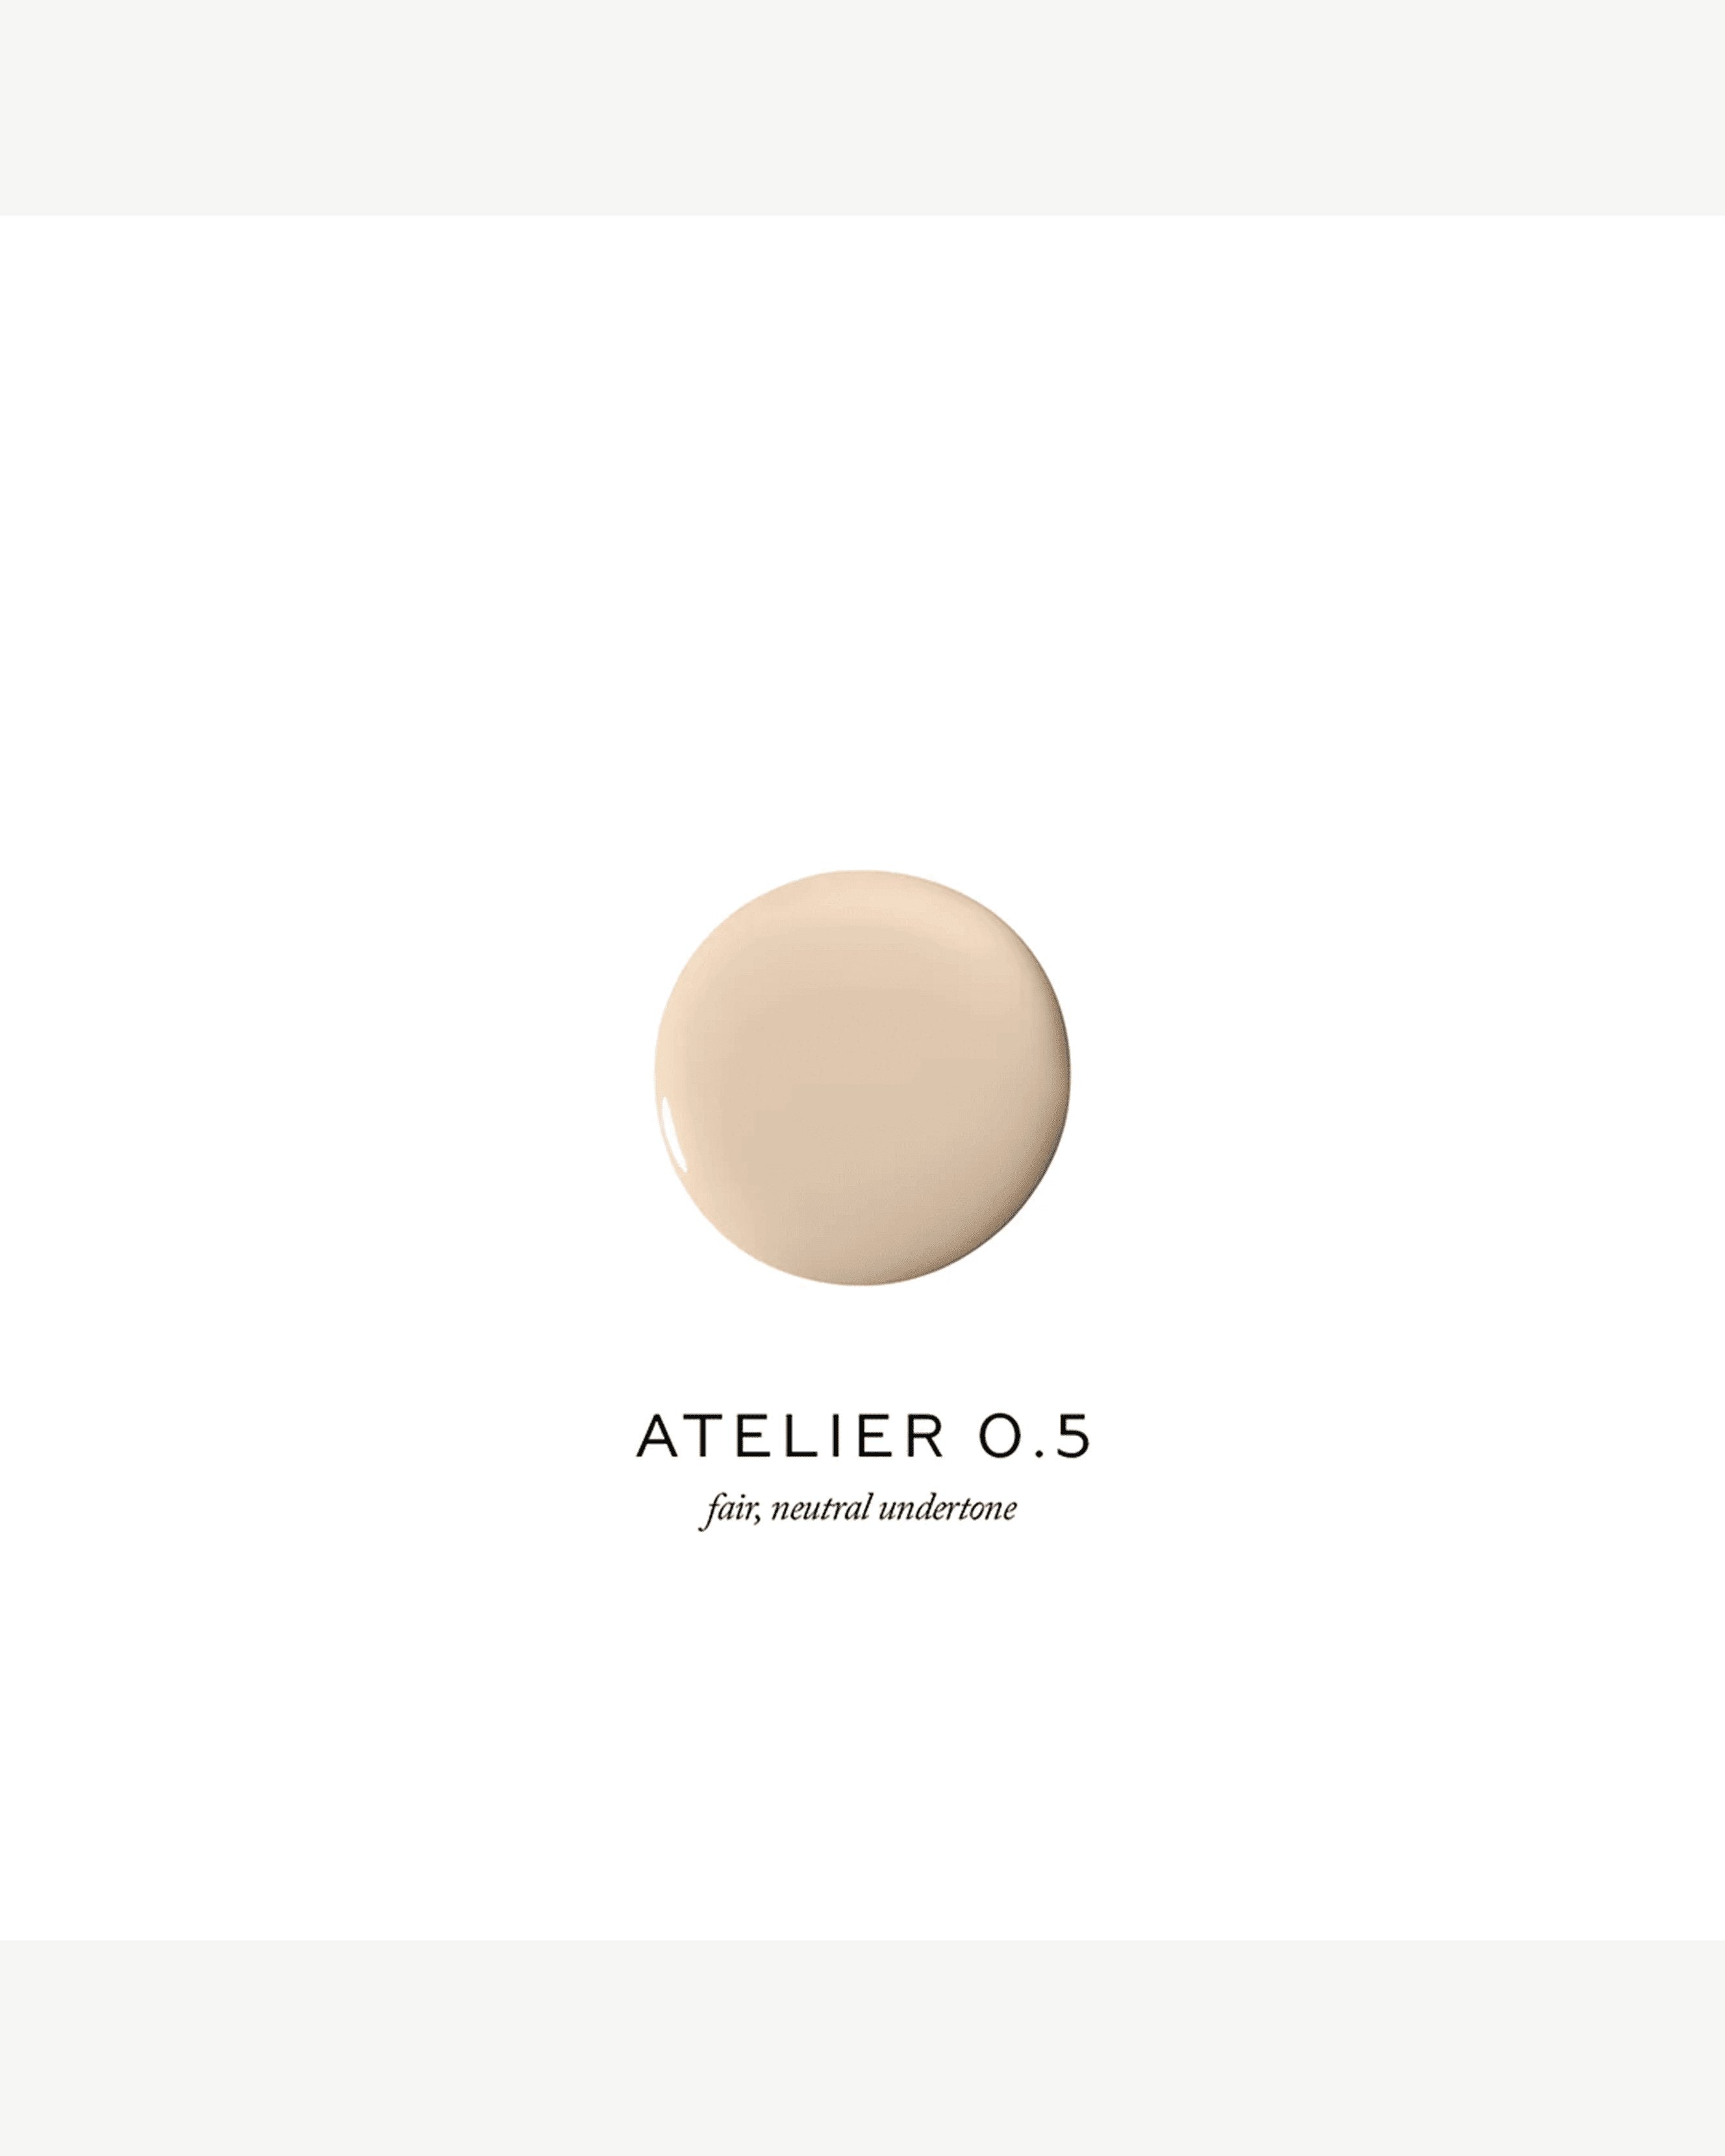 Atelier 0.5 (fair, neutral undertone)